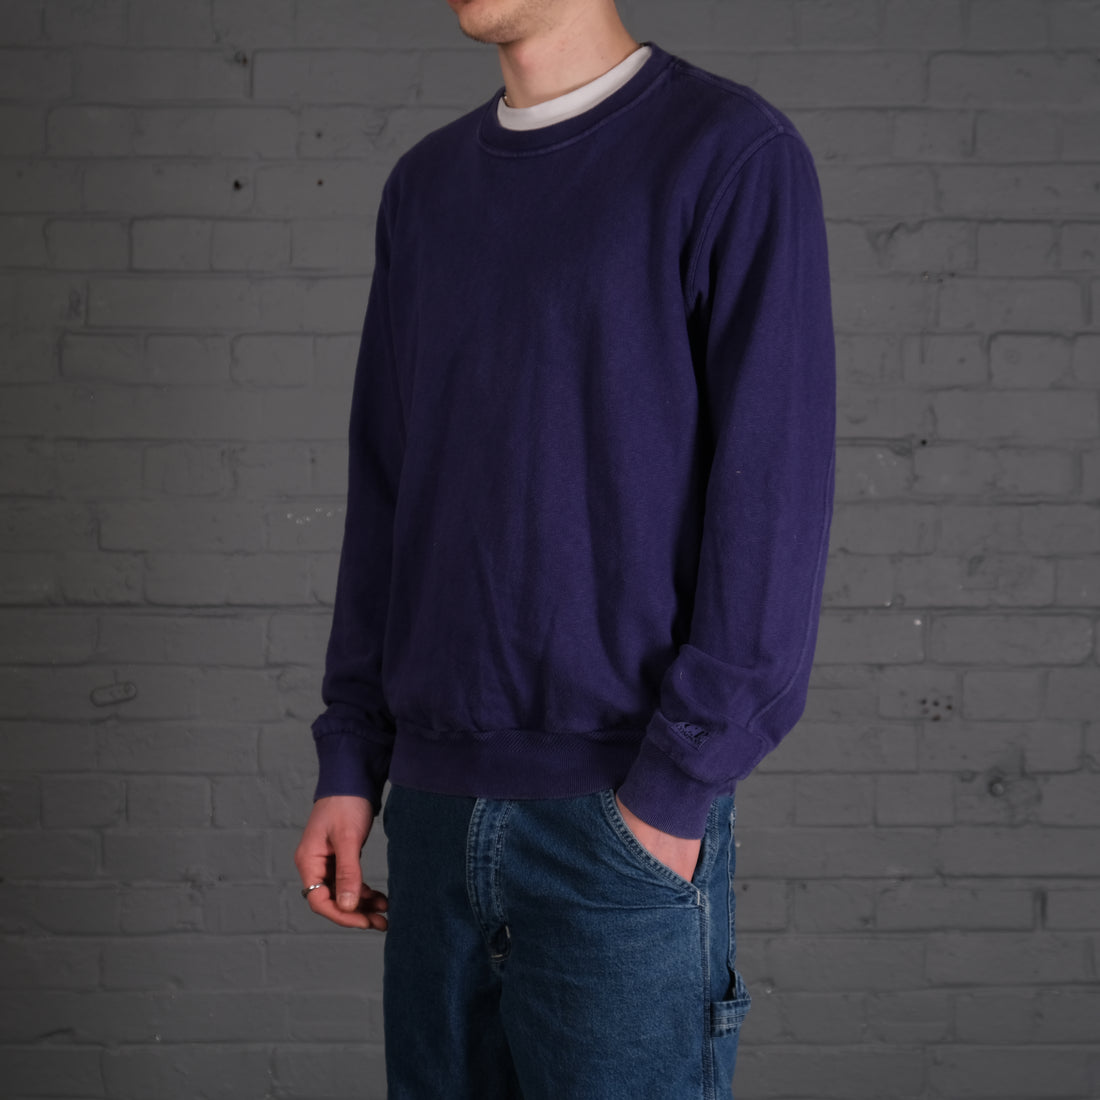 Vintage CP Company sweatshirt in purple